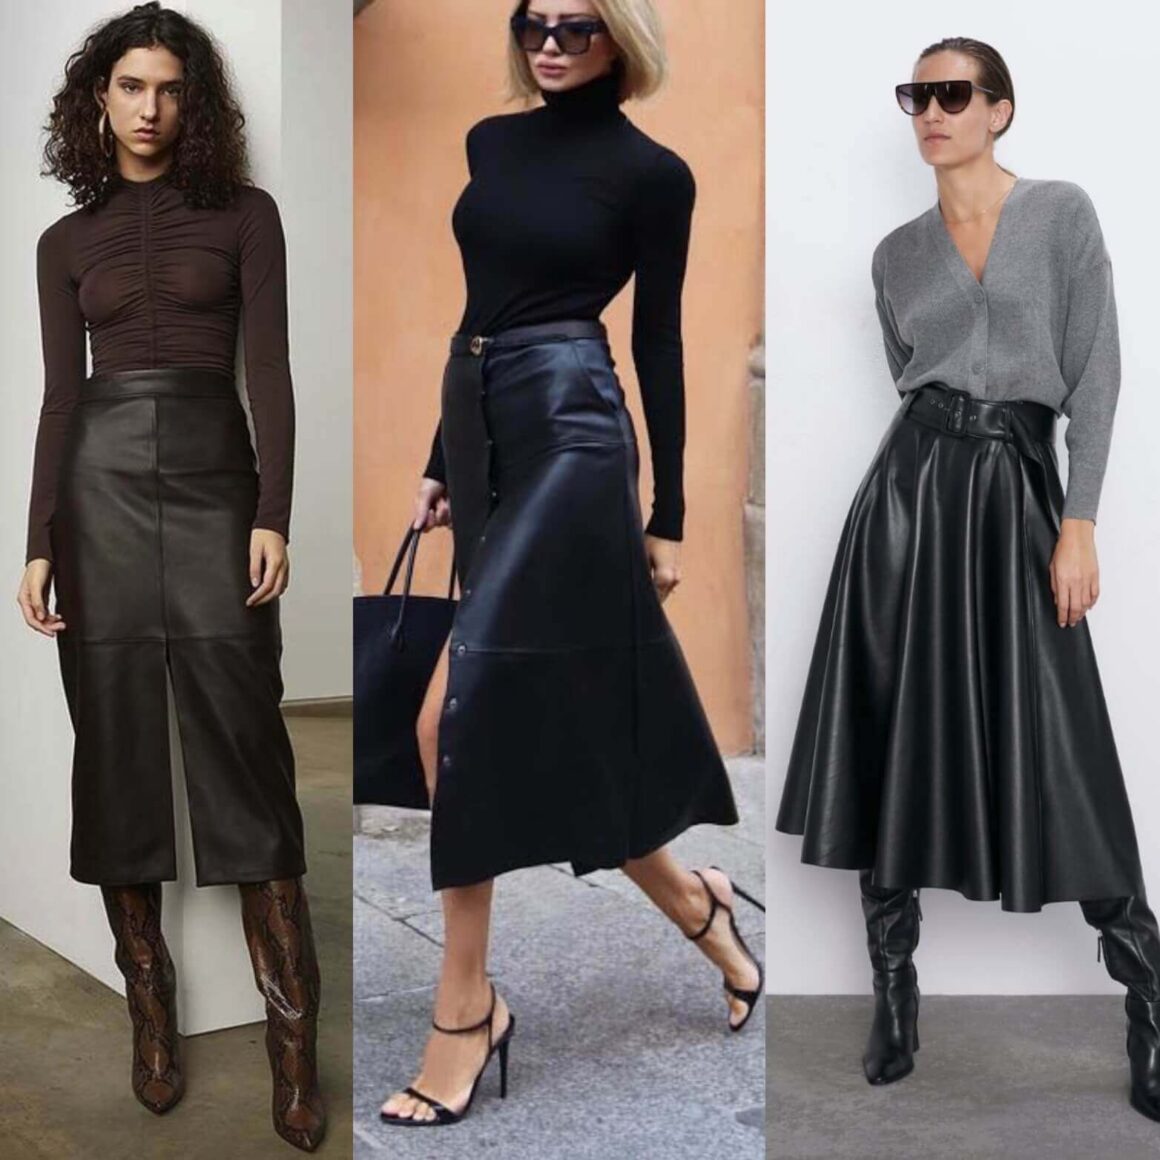 Black Leather Skirt